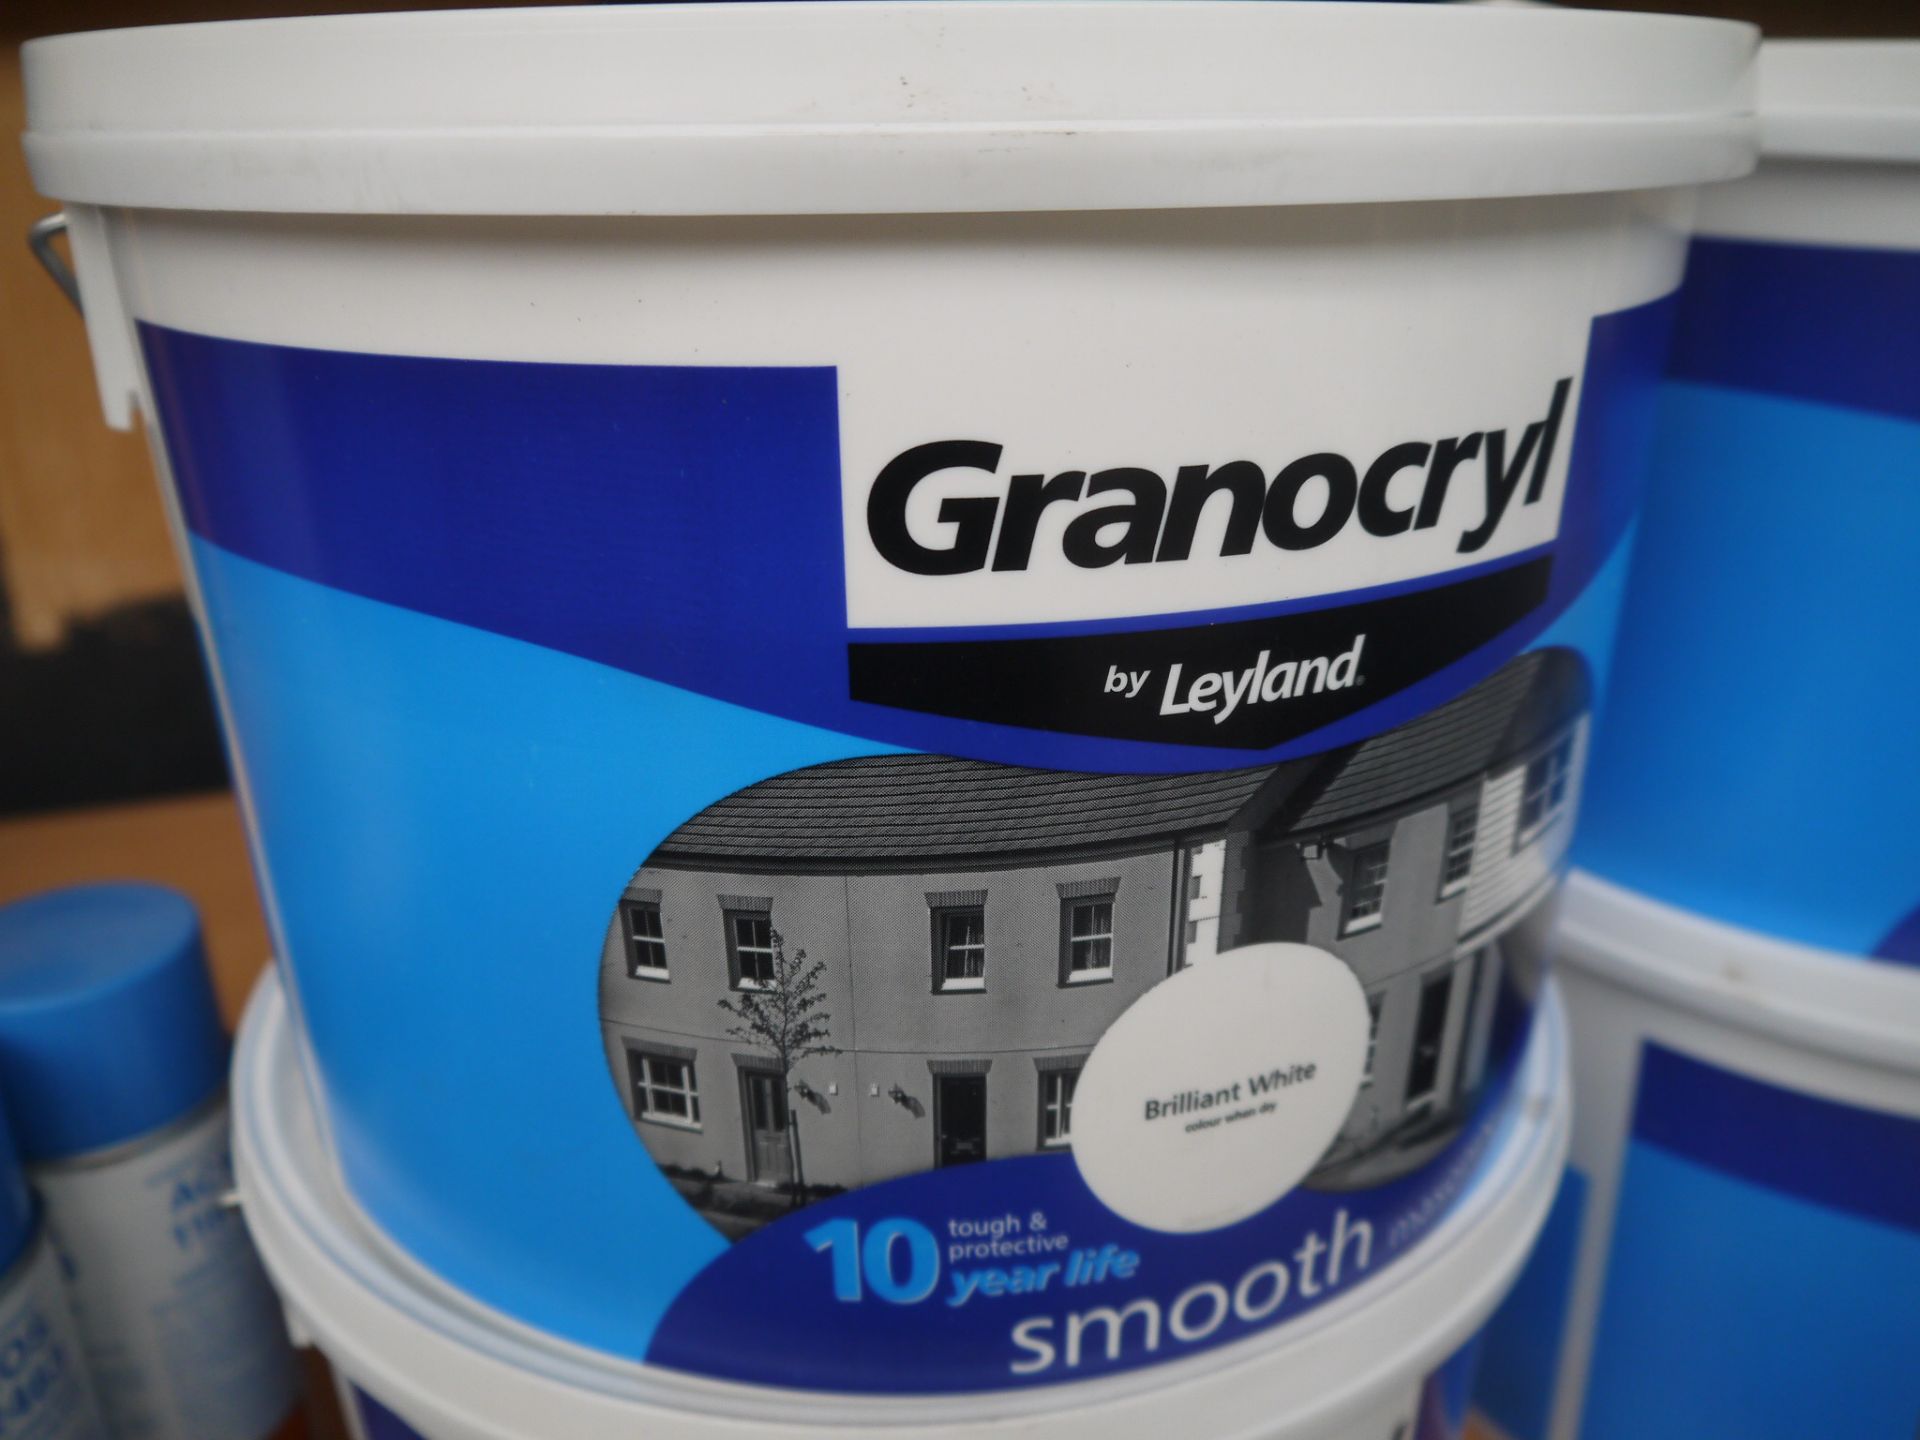 Granocryl by Leyland Brilliant White Smooth Masonry Paint, 10 litre. New